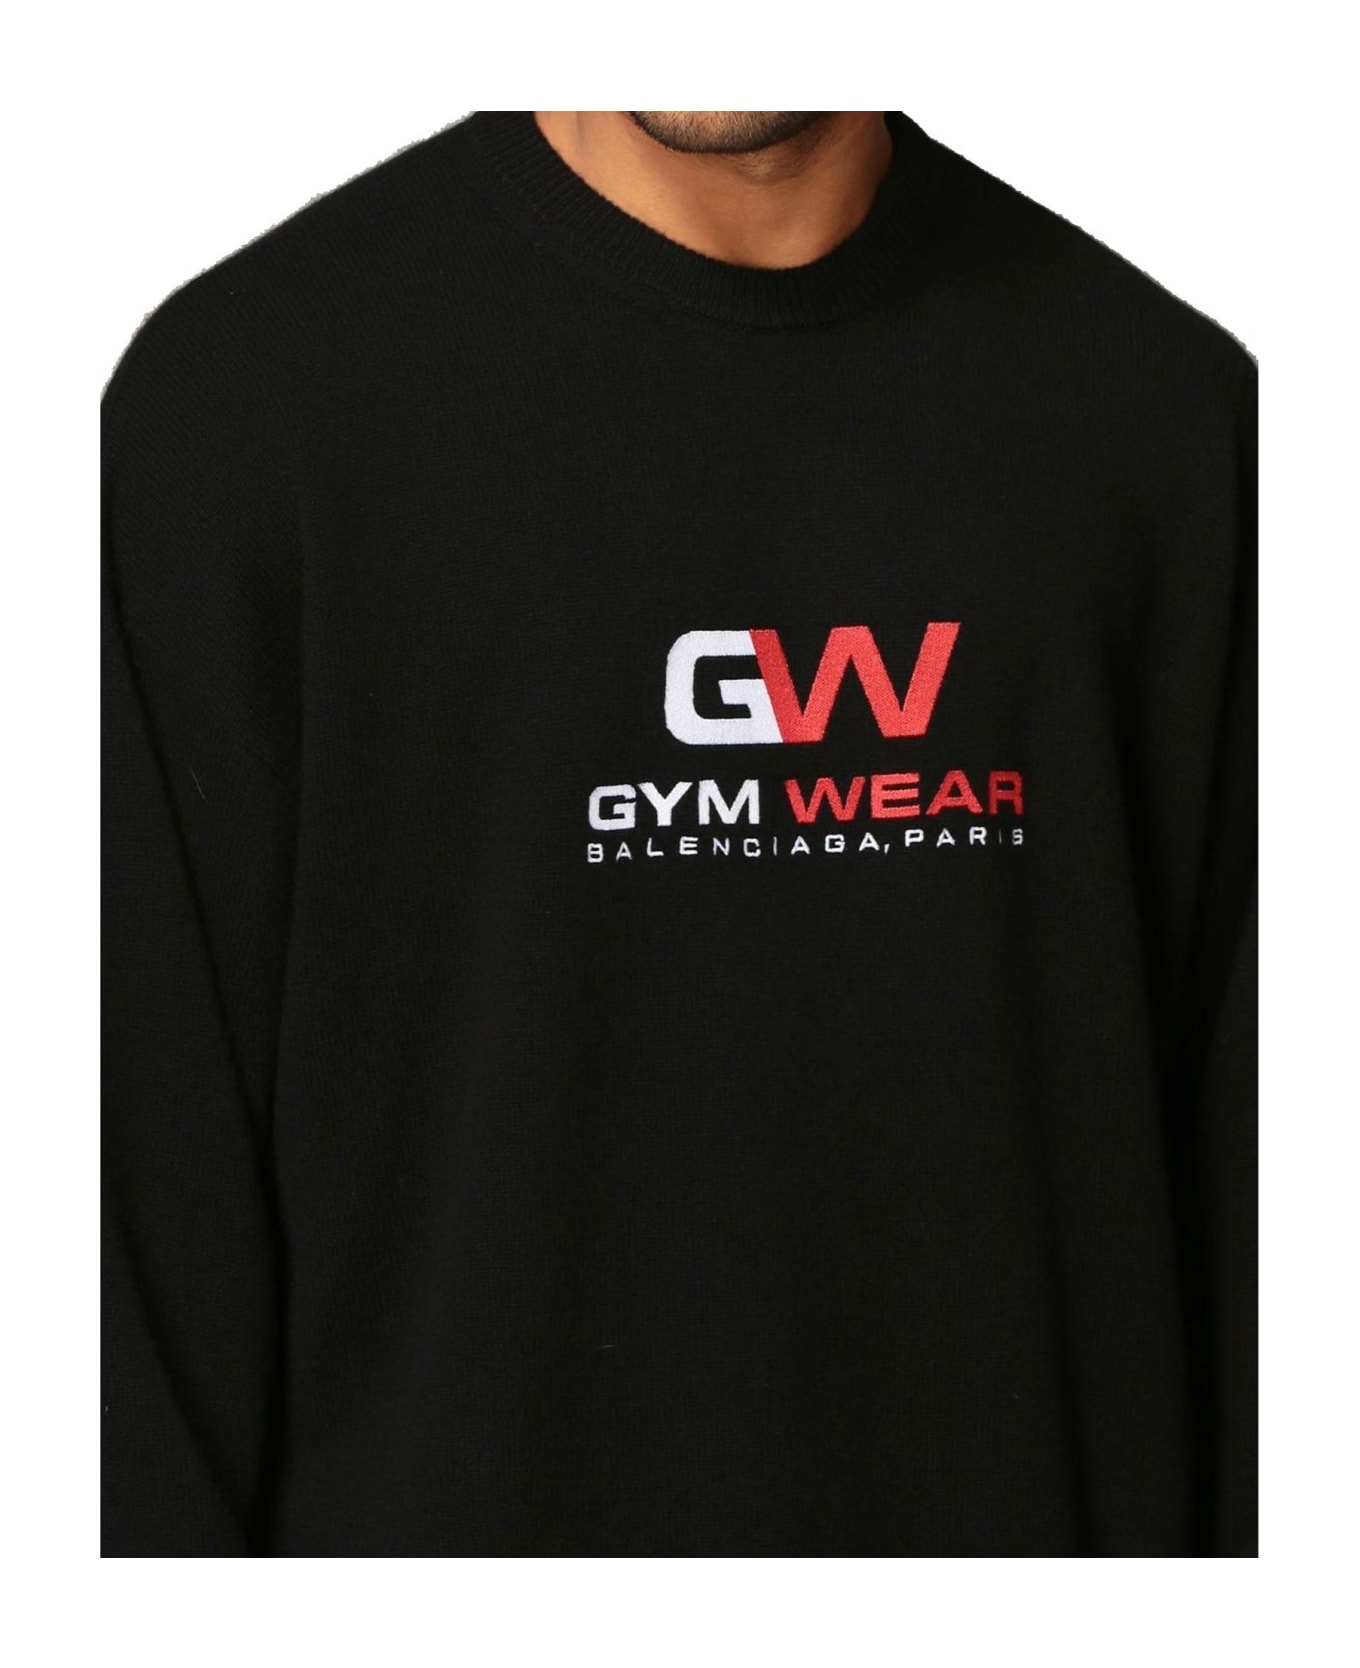 Balenciaga Gym Wear Cashmere Sweater - Black